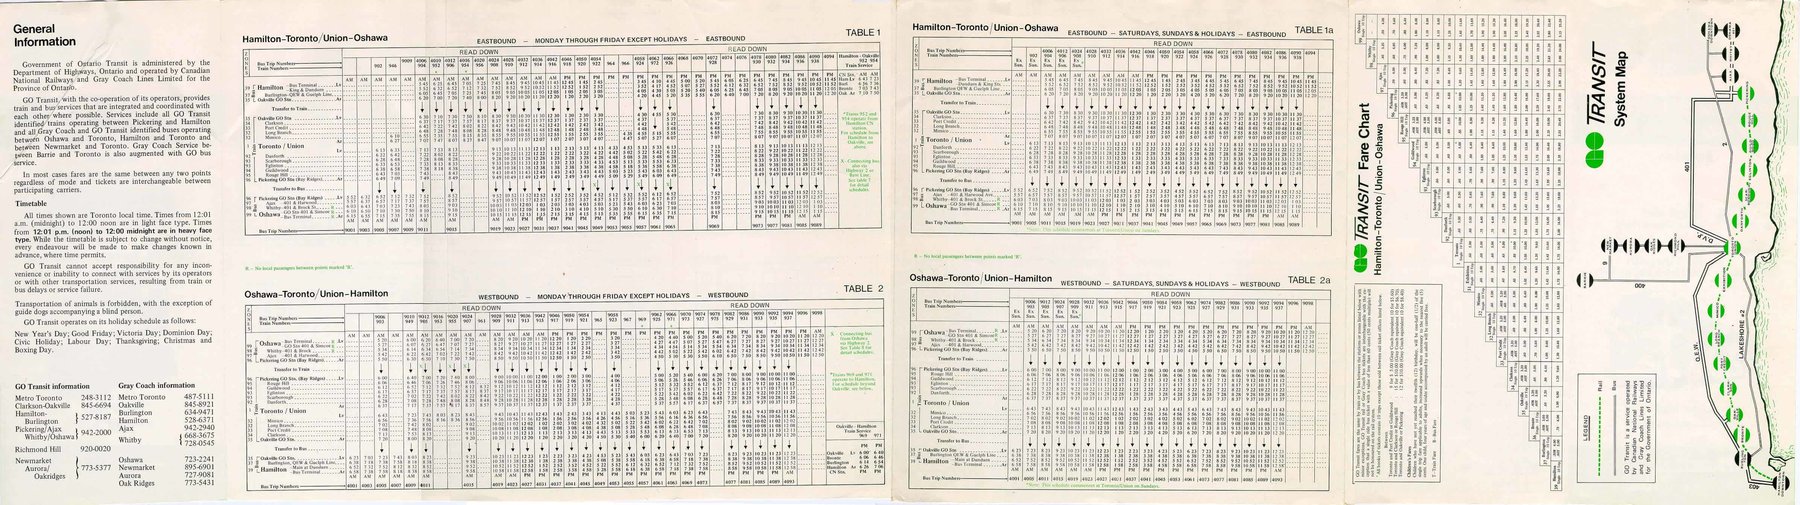 GO transit timetable circa 1970s